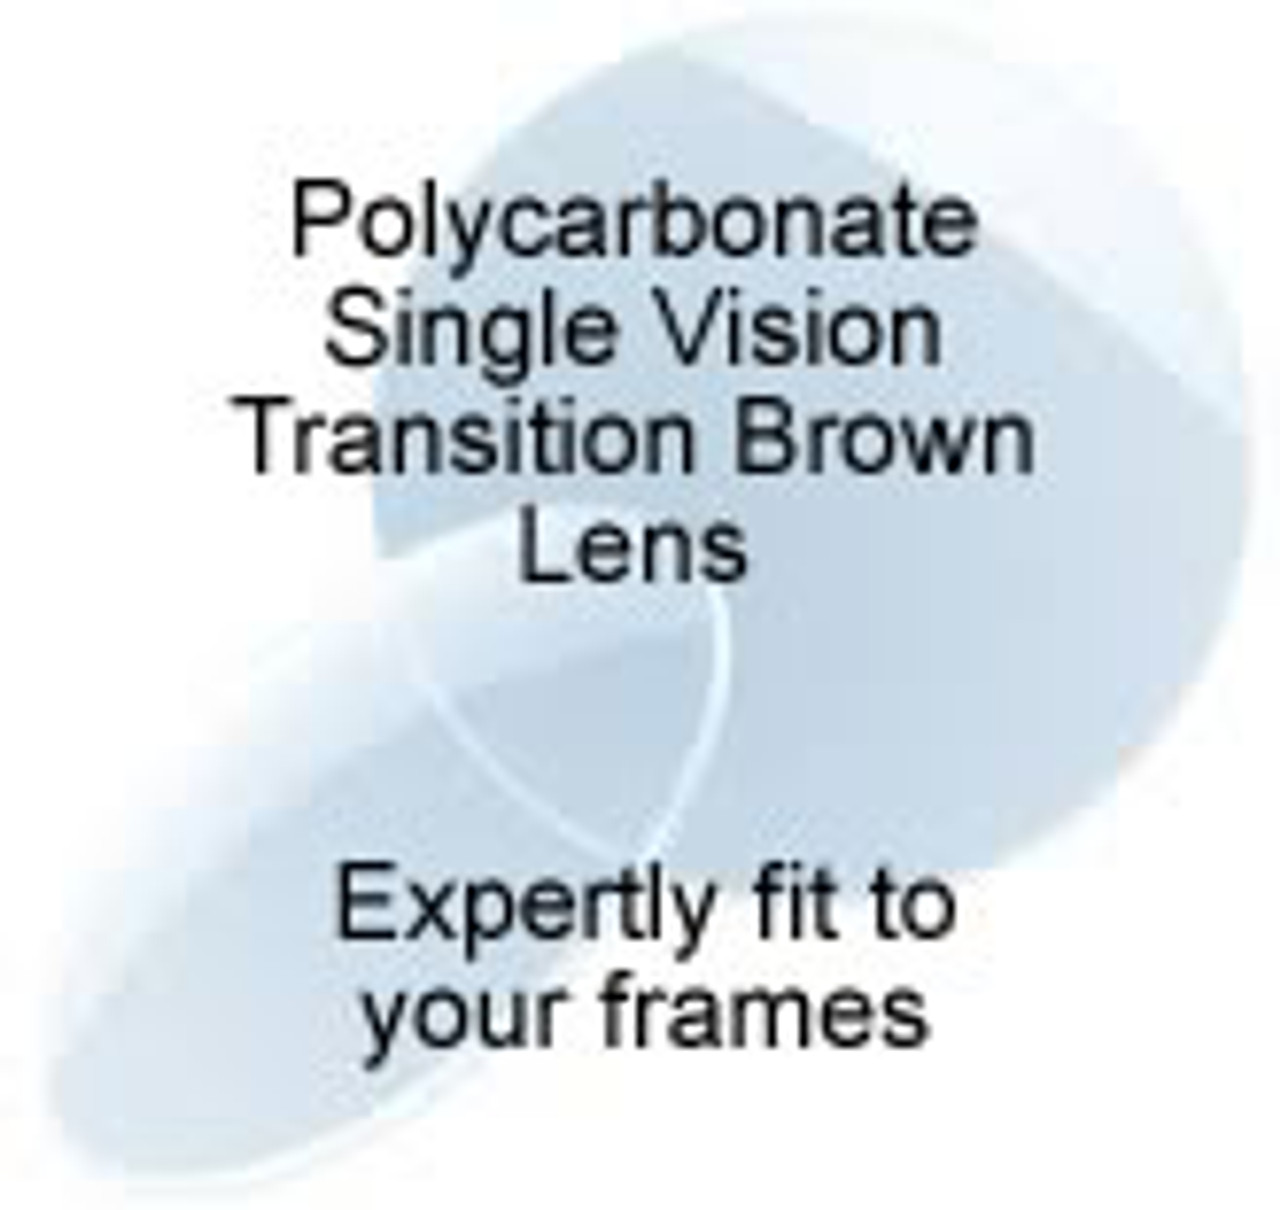 Polycarbonate Single Vision Transition Brown Lens - Eyeglassframes4less.com